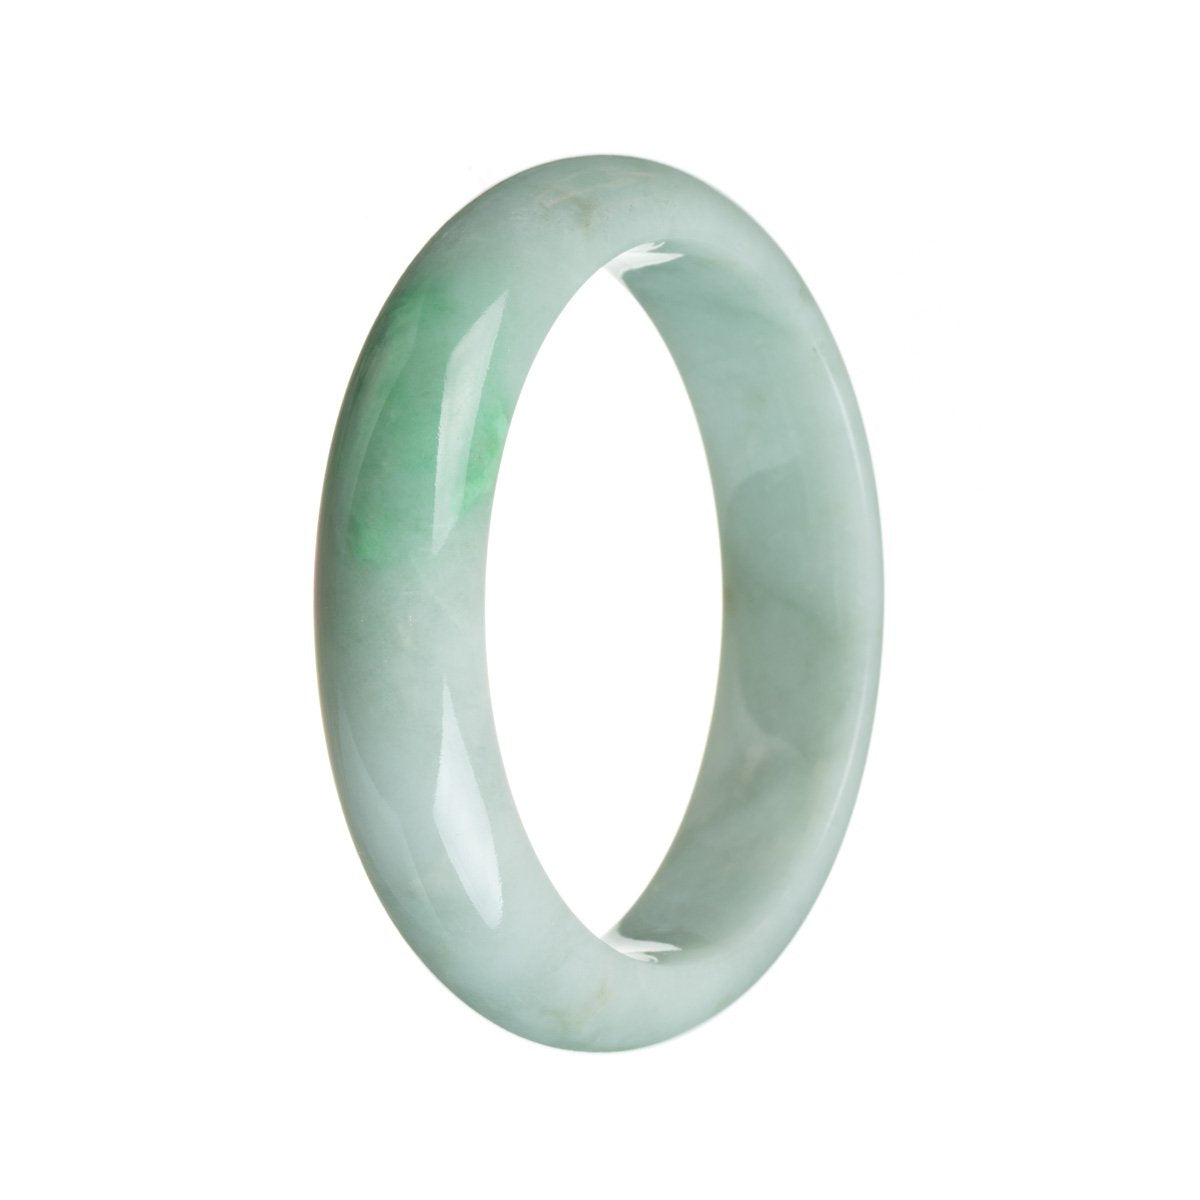 Authentic Grade A Green on white Jade Bangle Bracelet - 59mm Half Moon